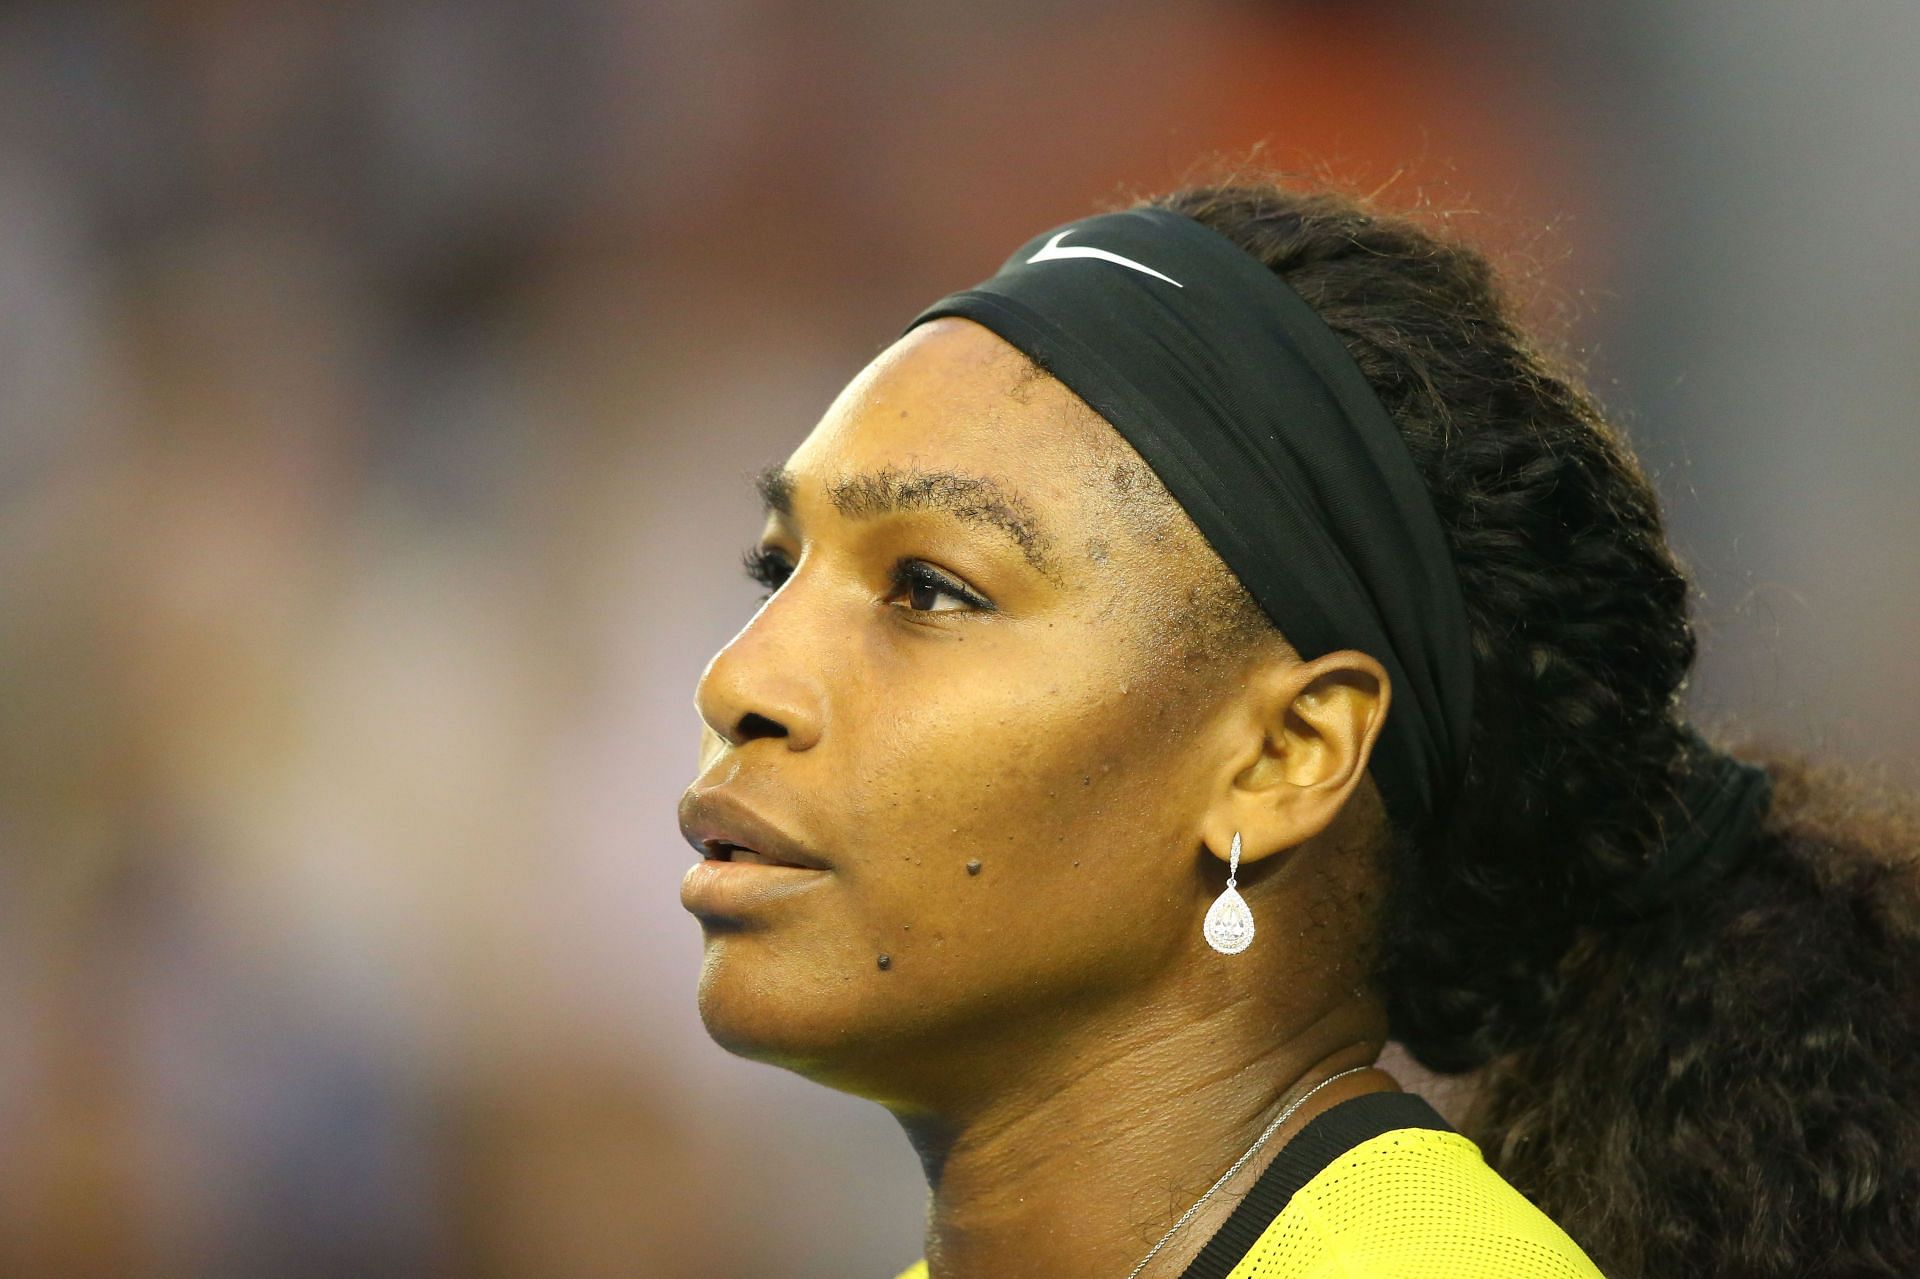 Serena Williams at the 2016 Australian Open